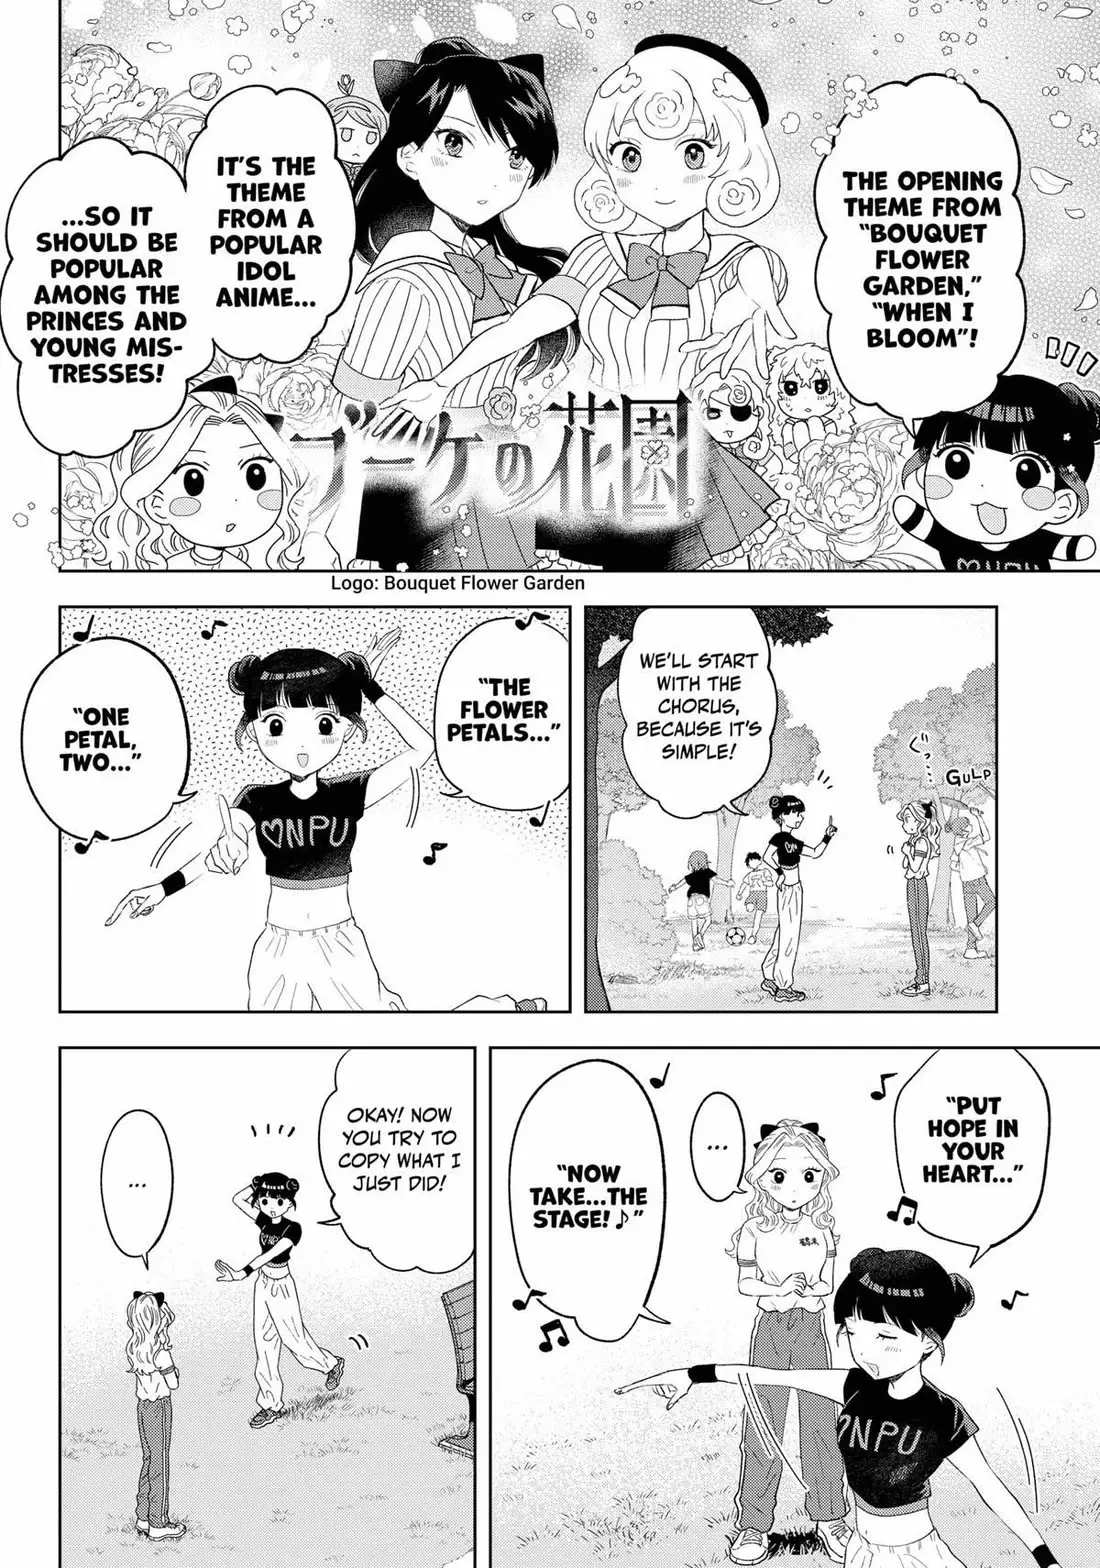 Tsuruko Returns The Favor - 18 page 8-bc88de96